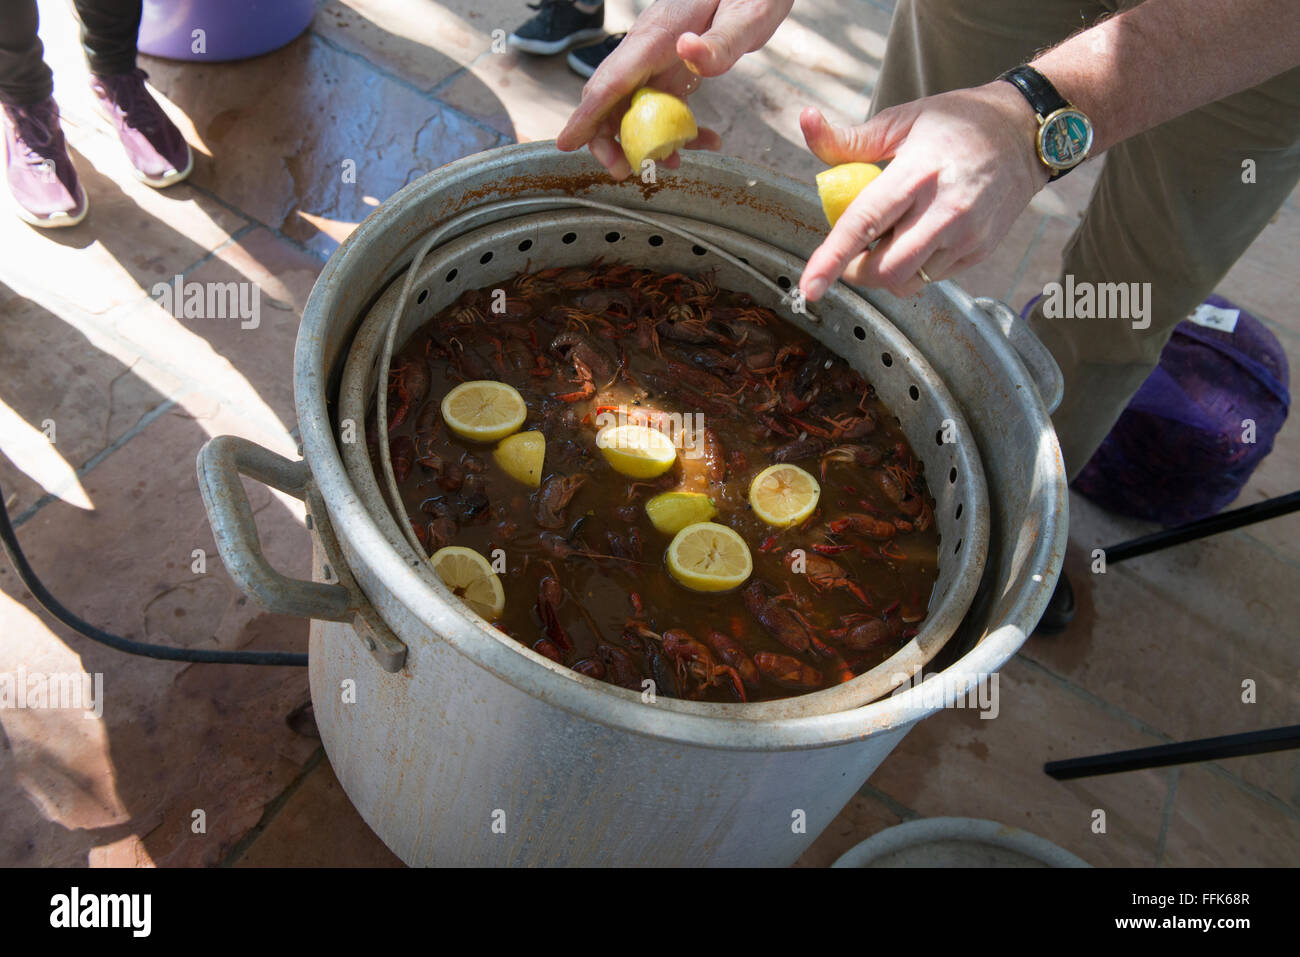 Squeezing lemon juice into the crawfish boil. Stock Photo